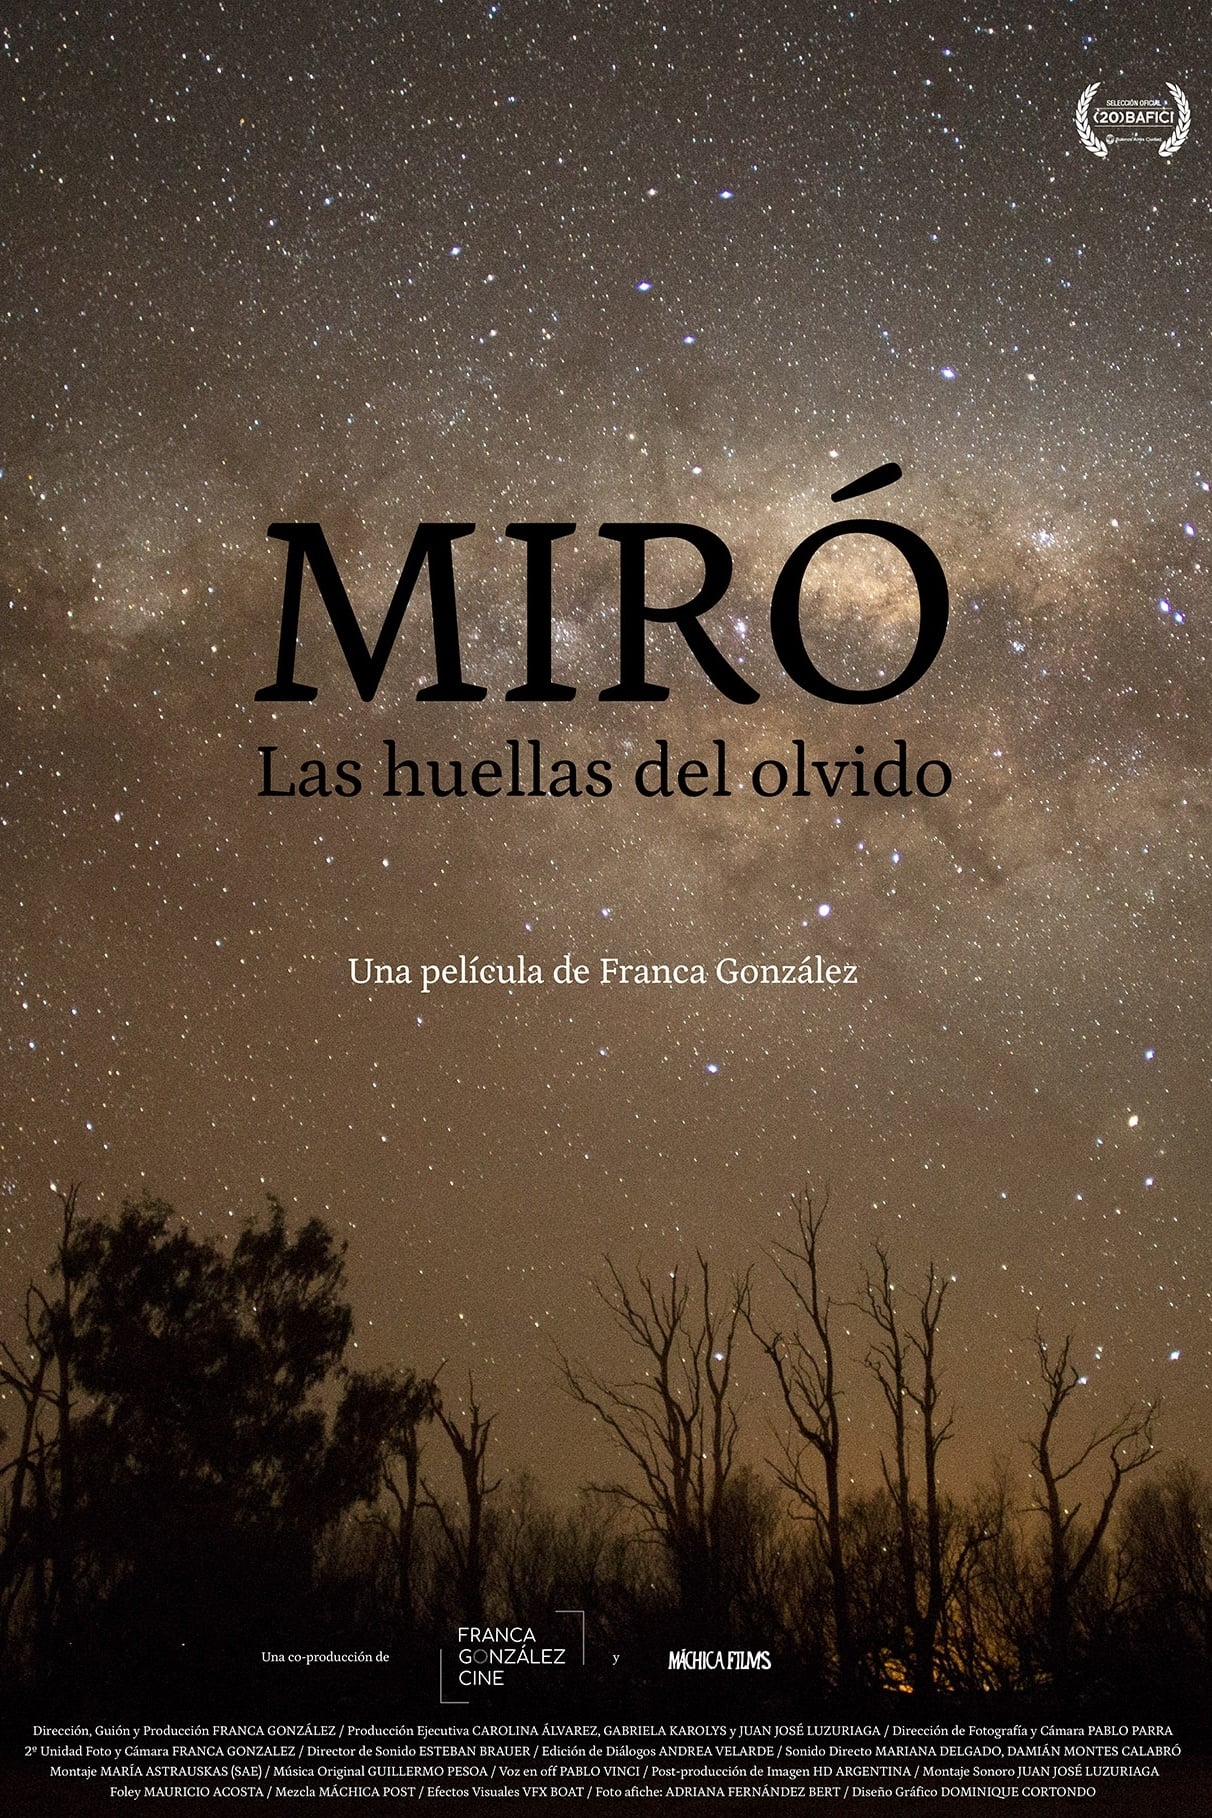 Miró. Traces of Oblivion